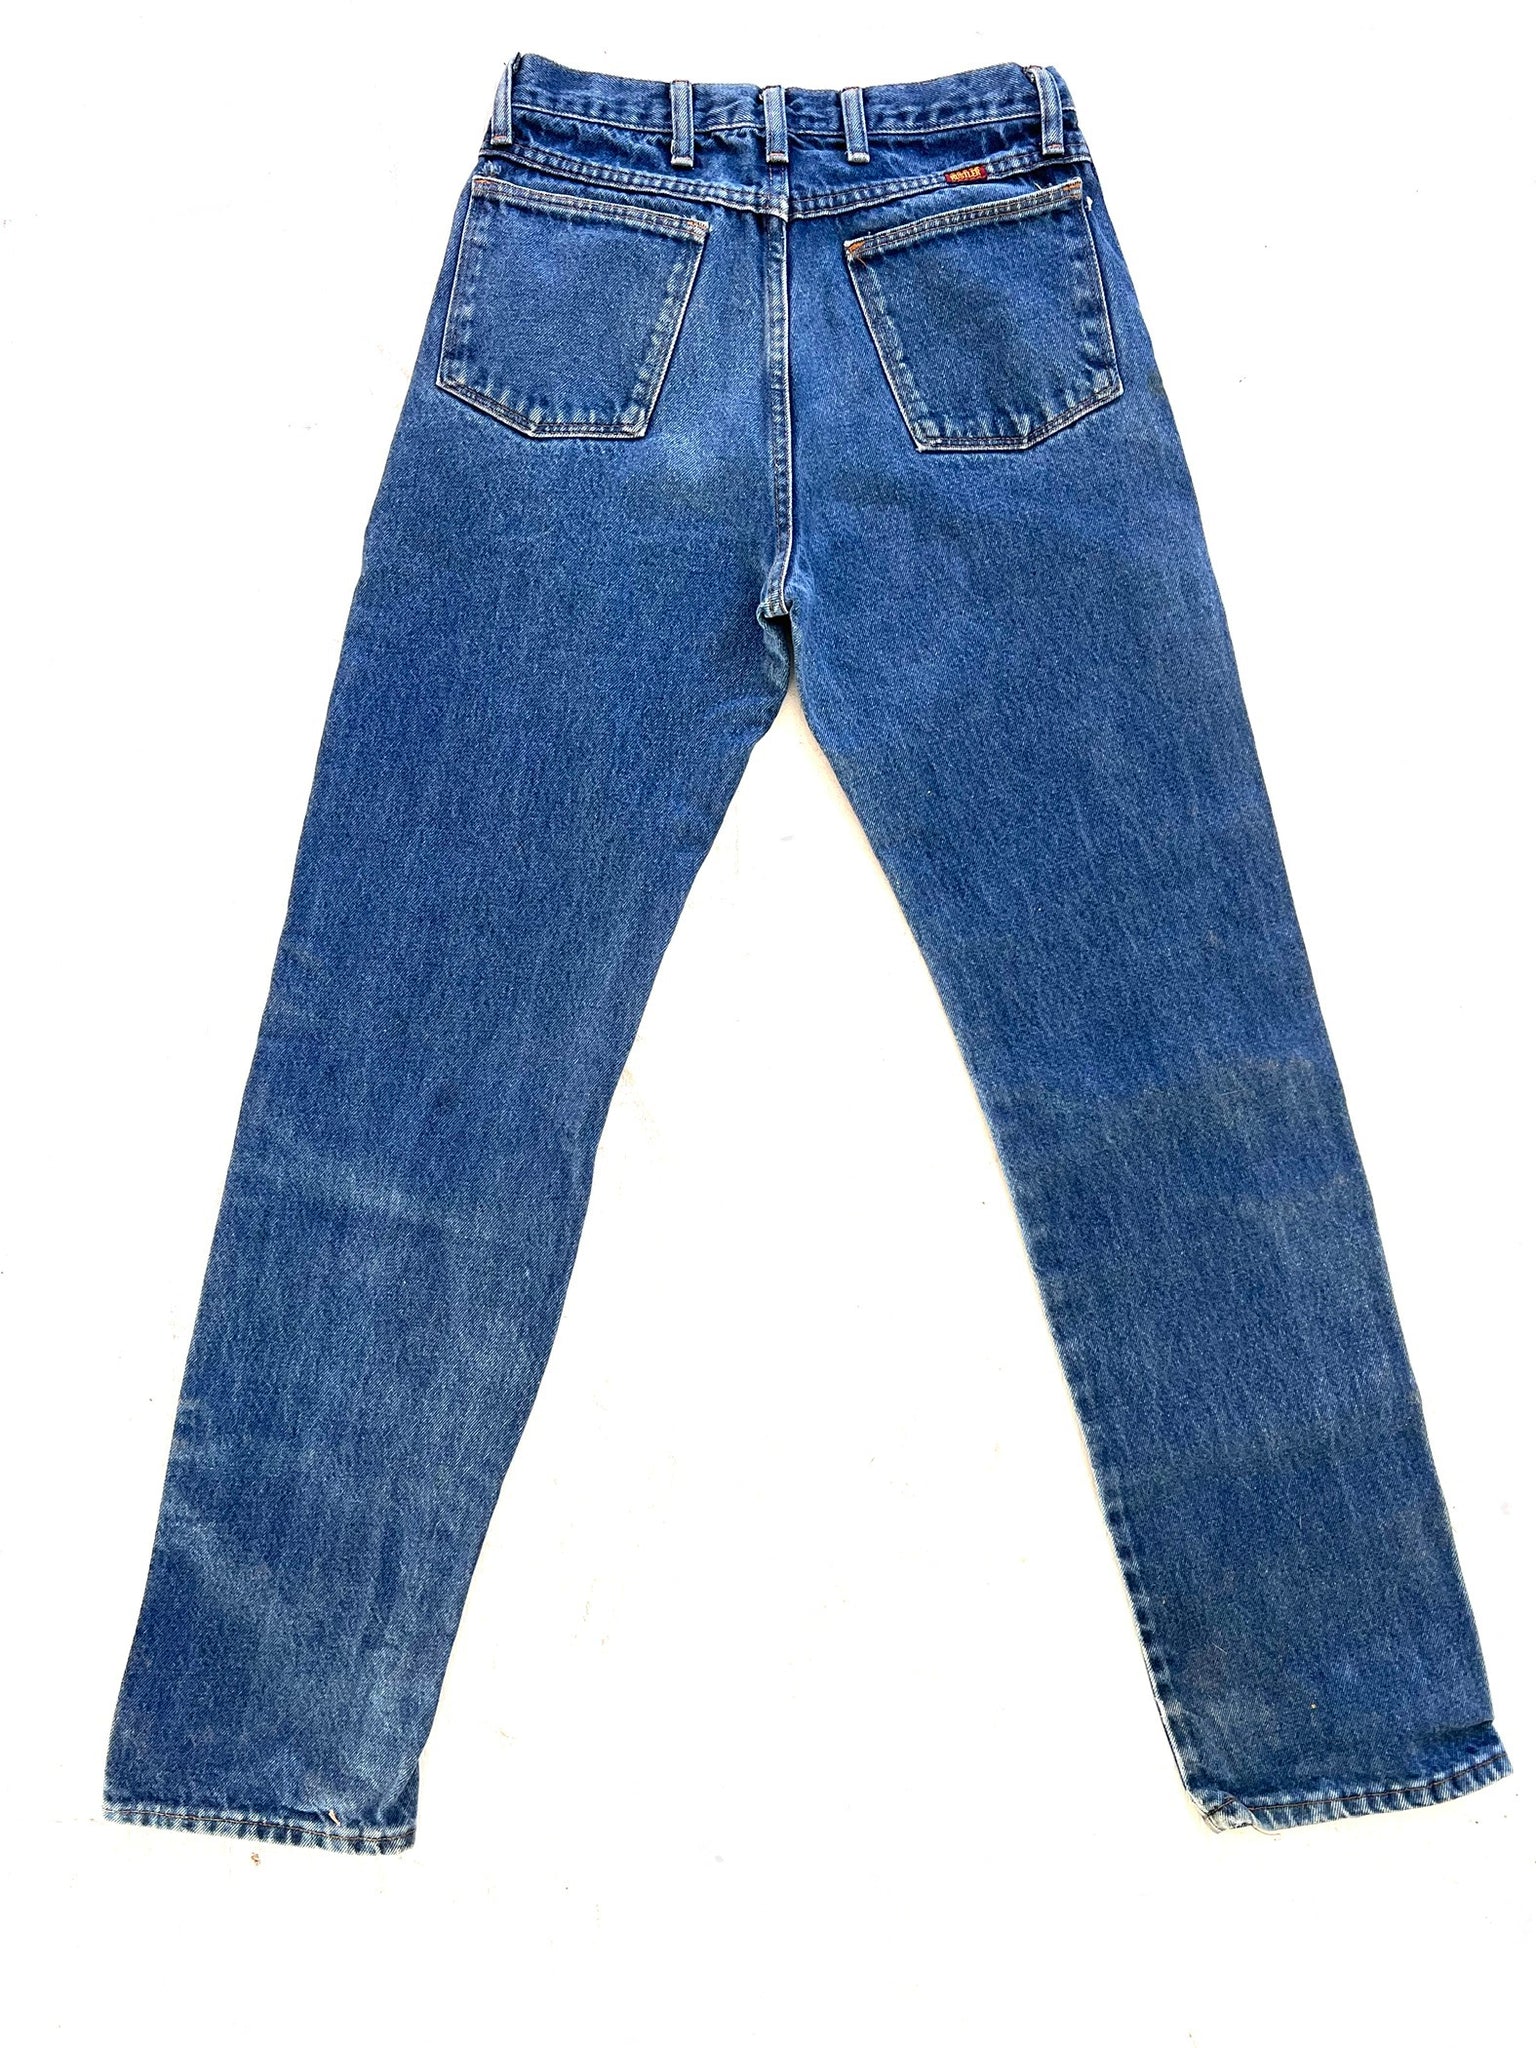 Vintage Rustler Zip Fly Jeans 28 x 31